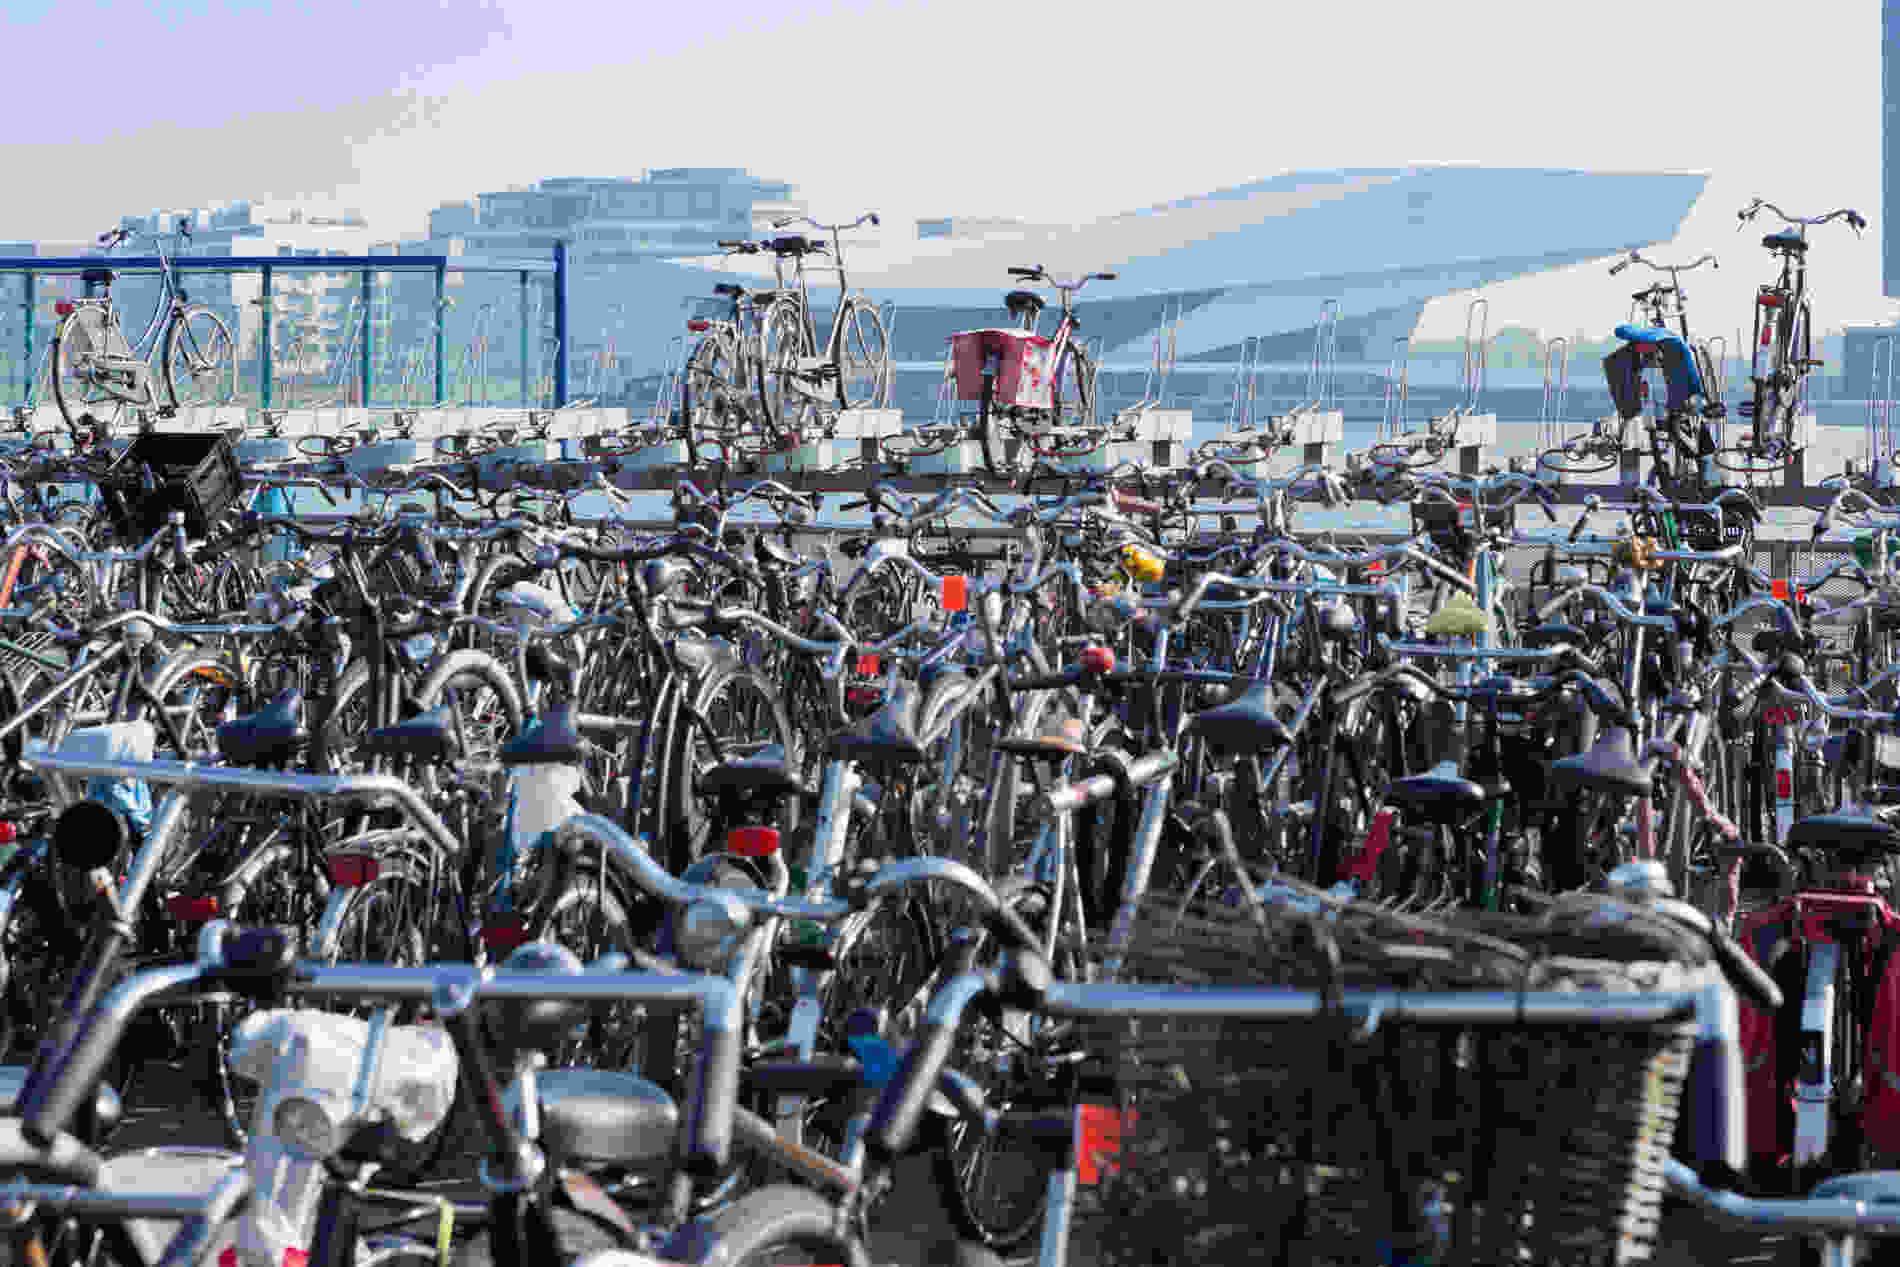 143 eye film institute netherlands iwan baan 053 exterior view bikes